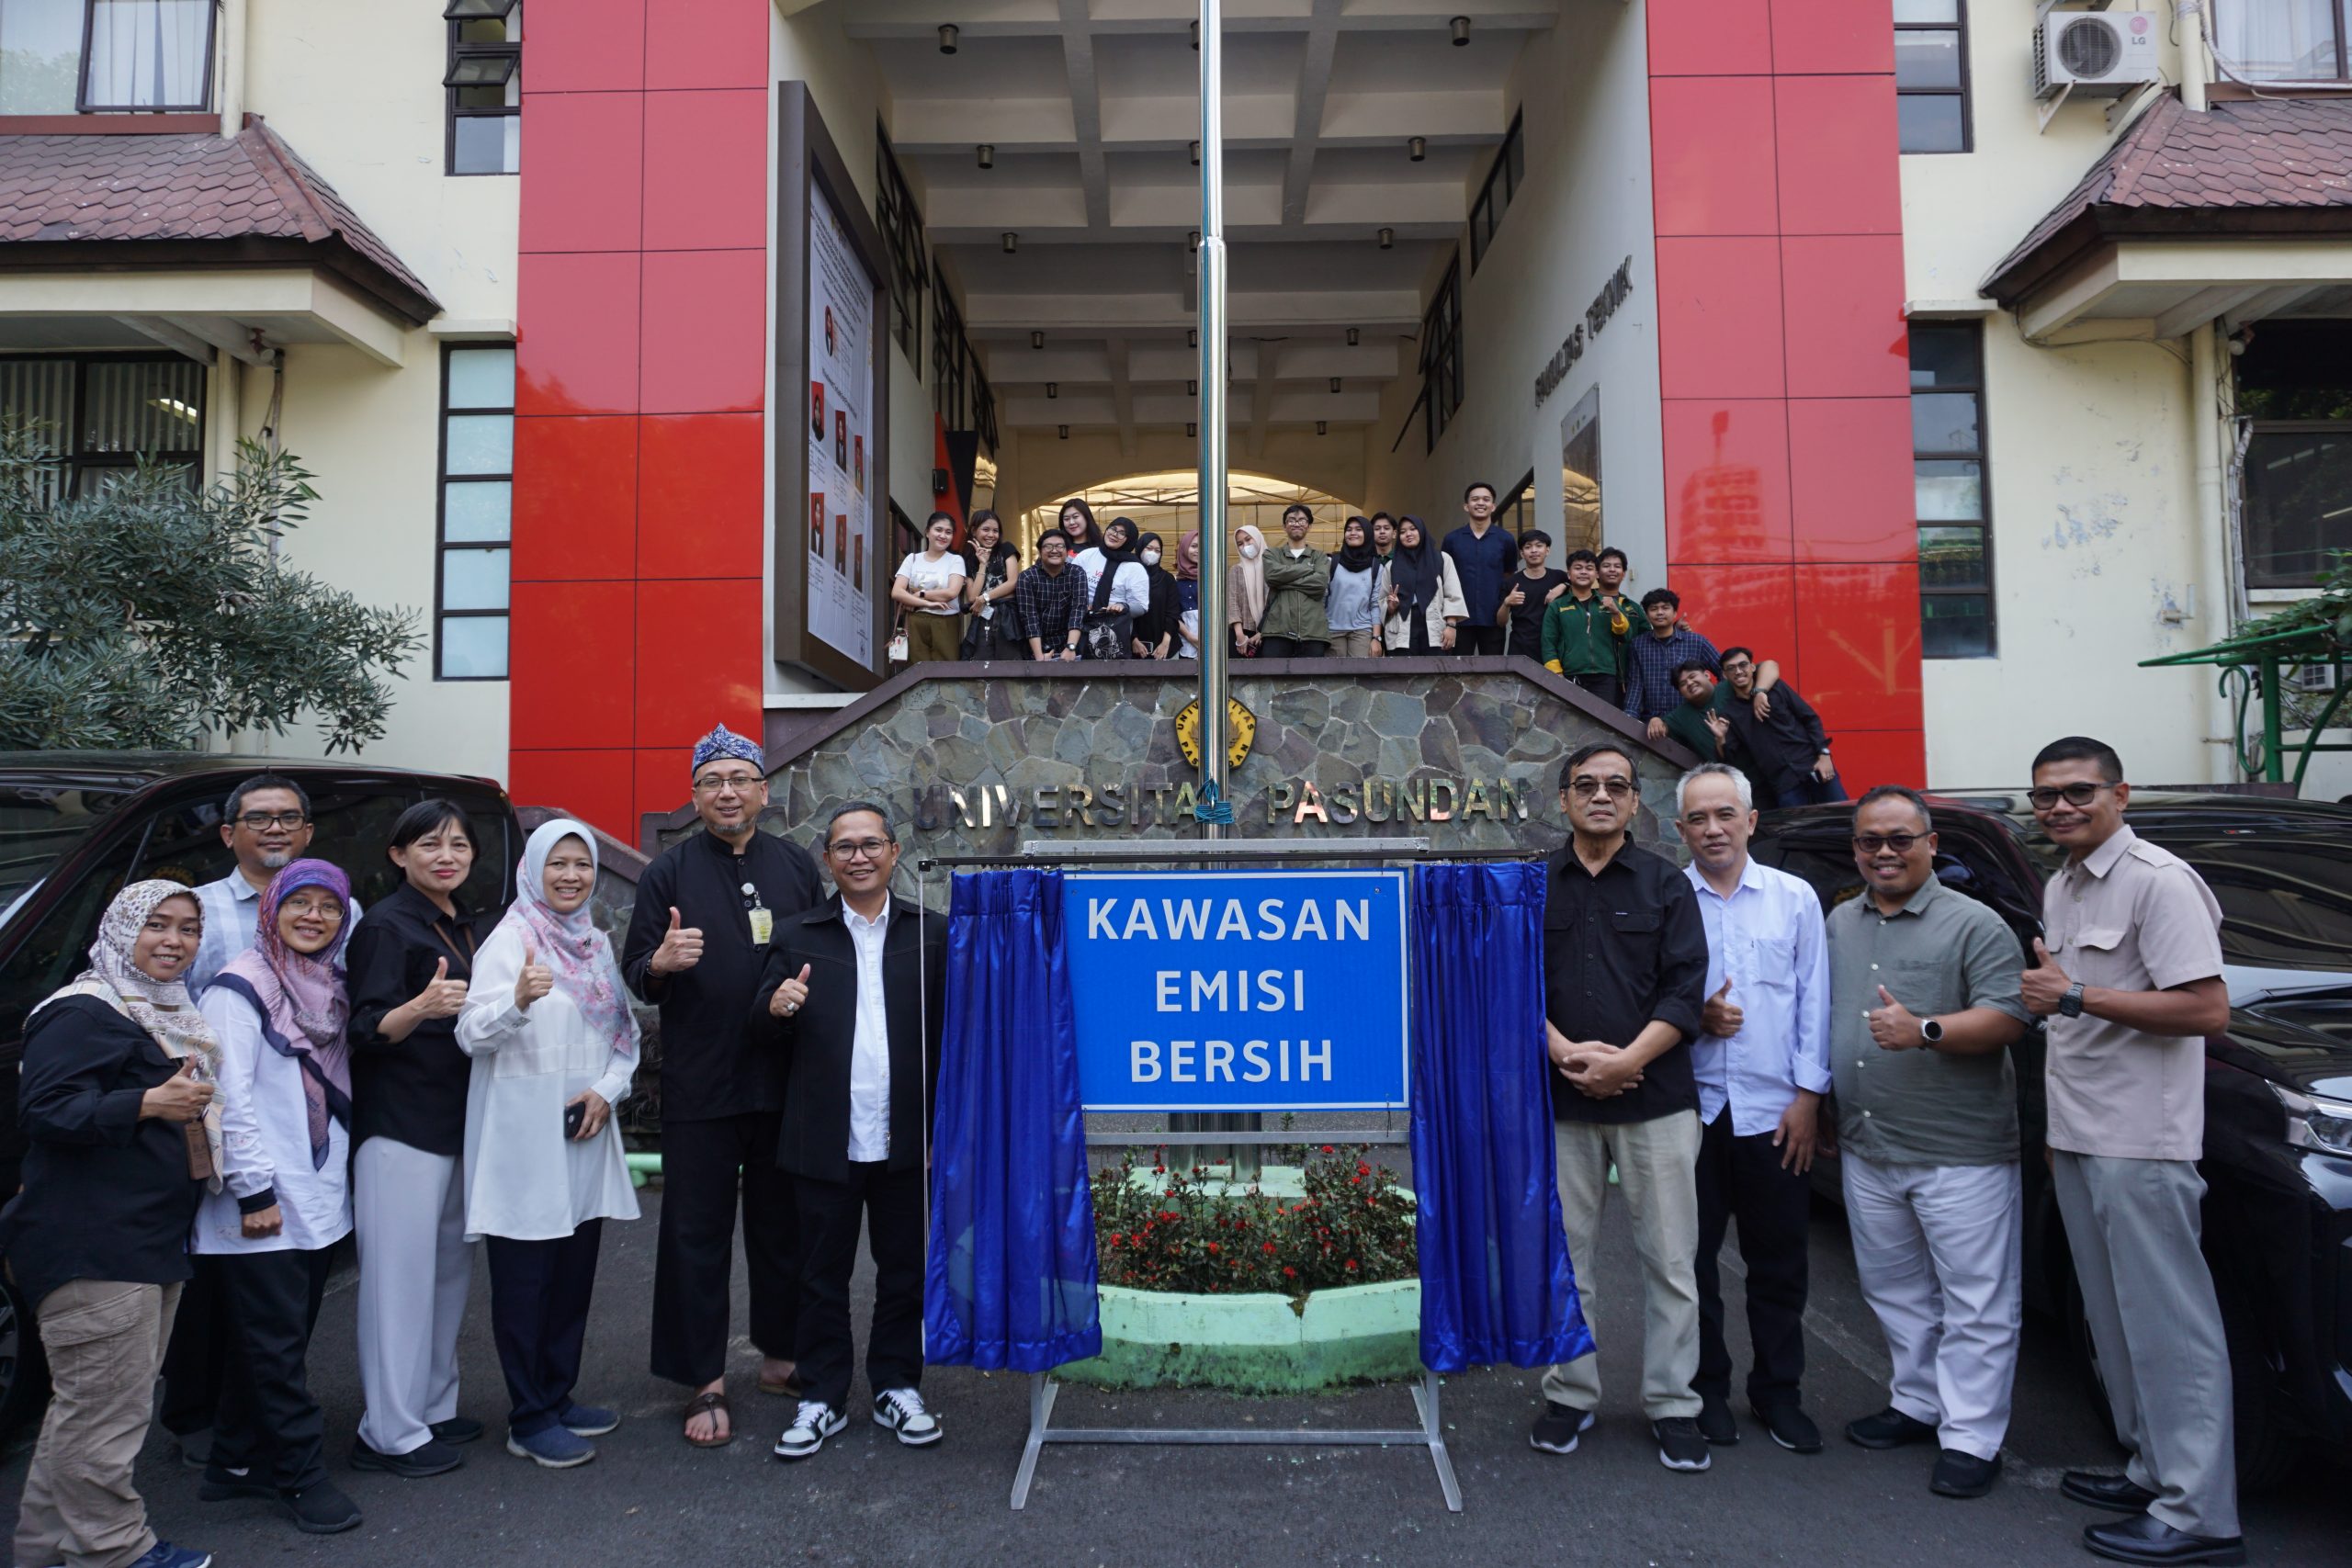 Fakultas Teknik Unpas : Tonggak Baru Menuju Kawasan Emisi Bersih di Kota Bandung